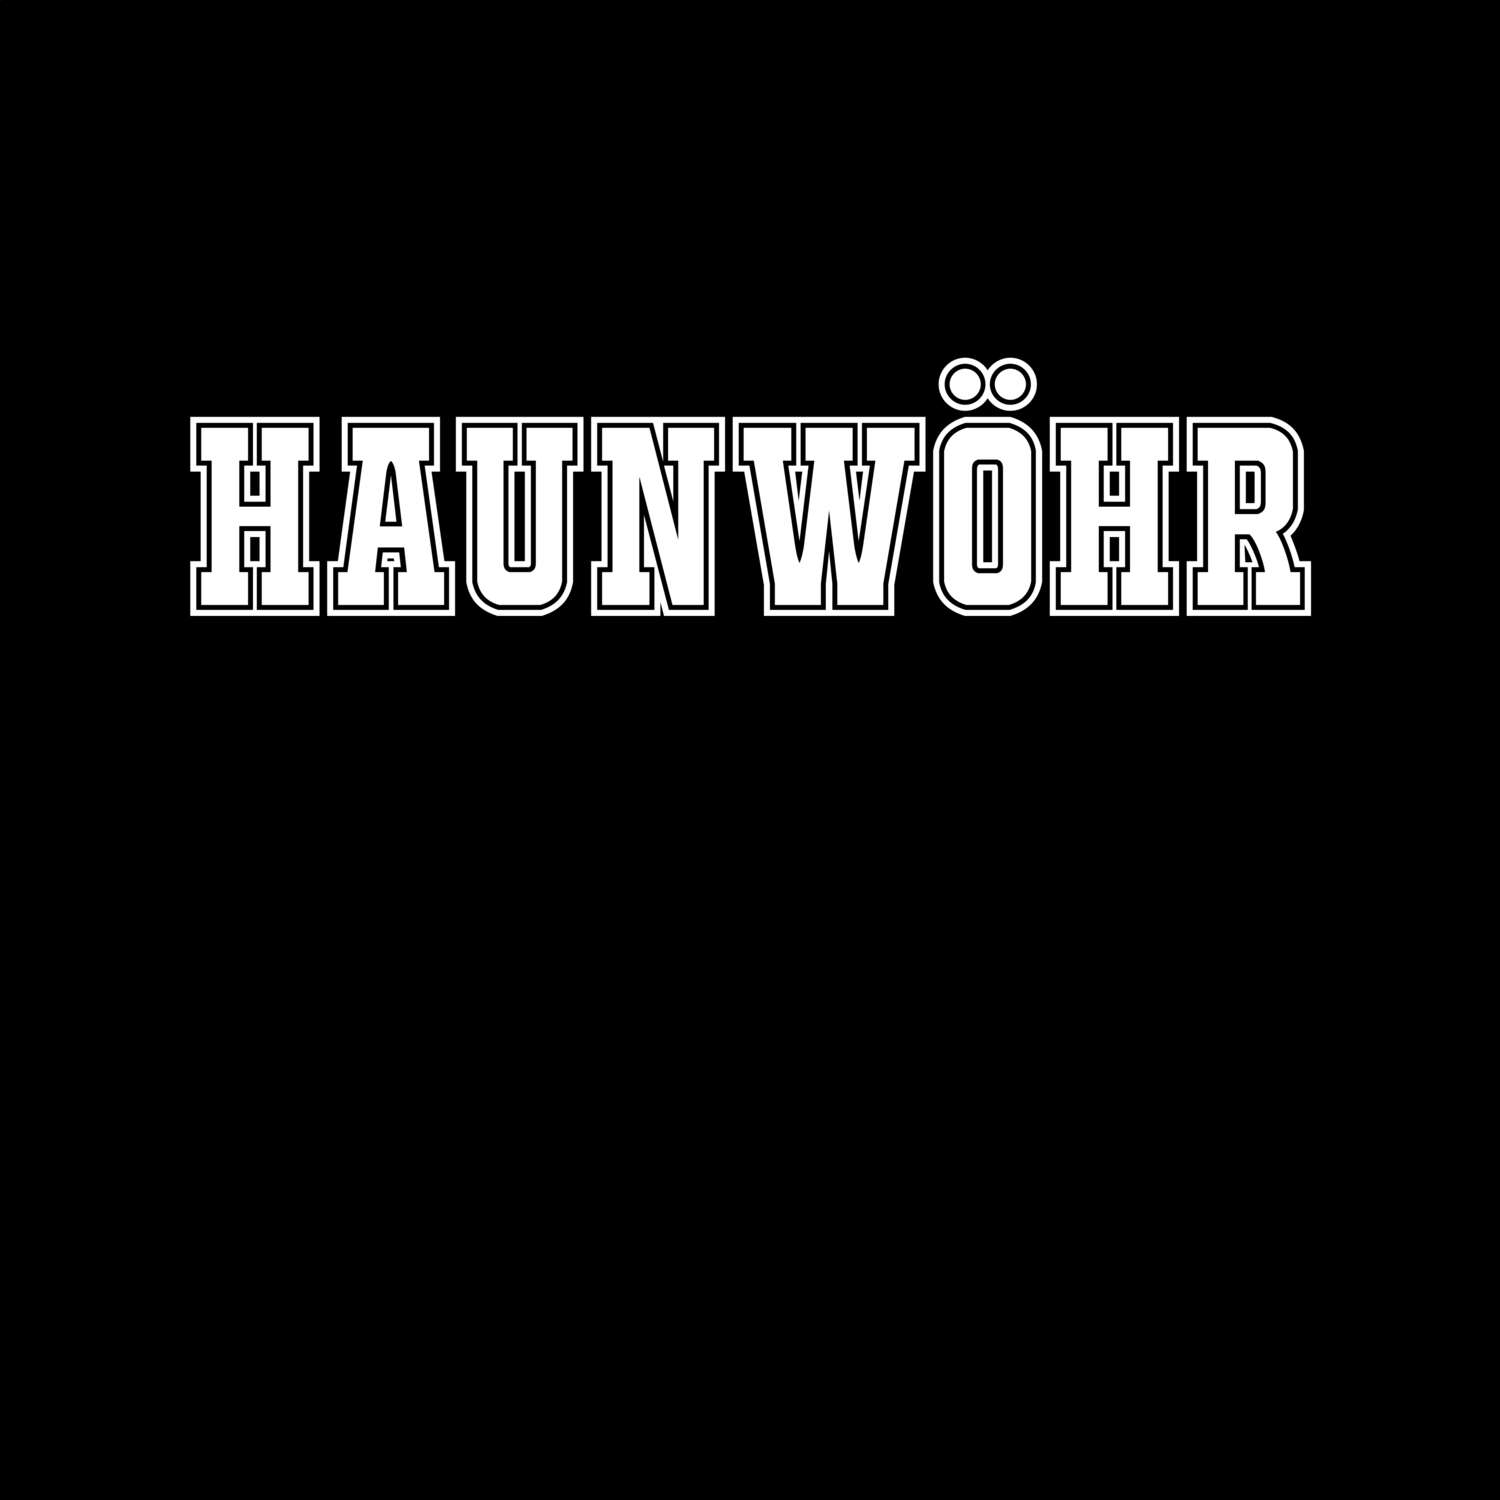 Haunwöhr T-Shirt »Classic«